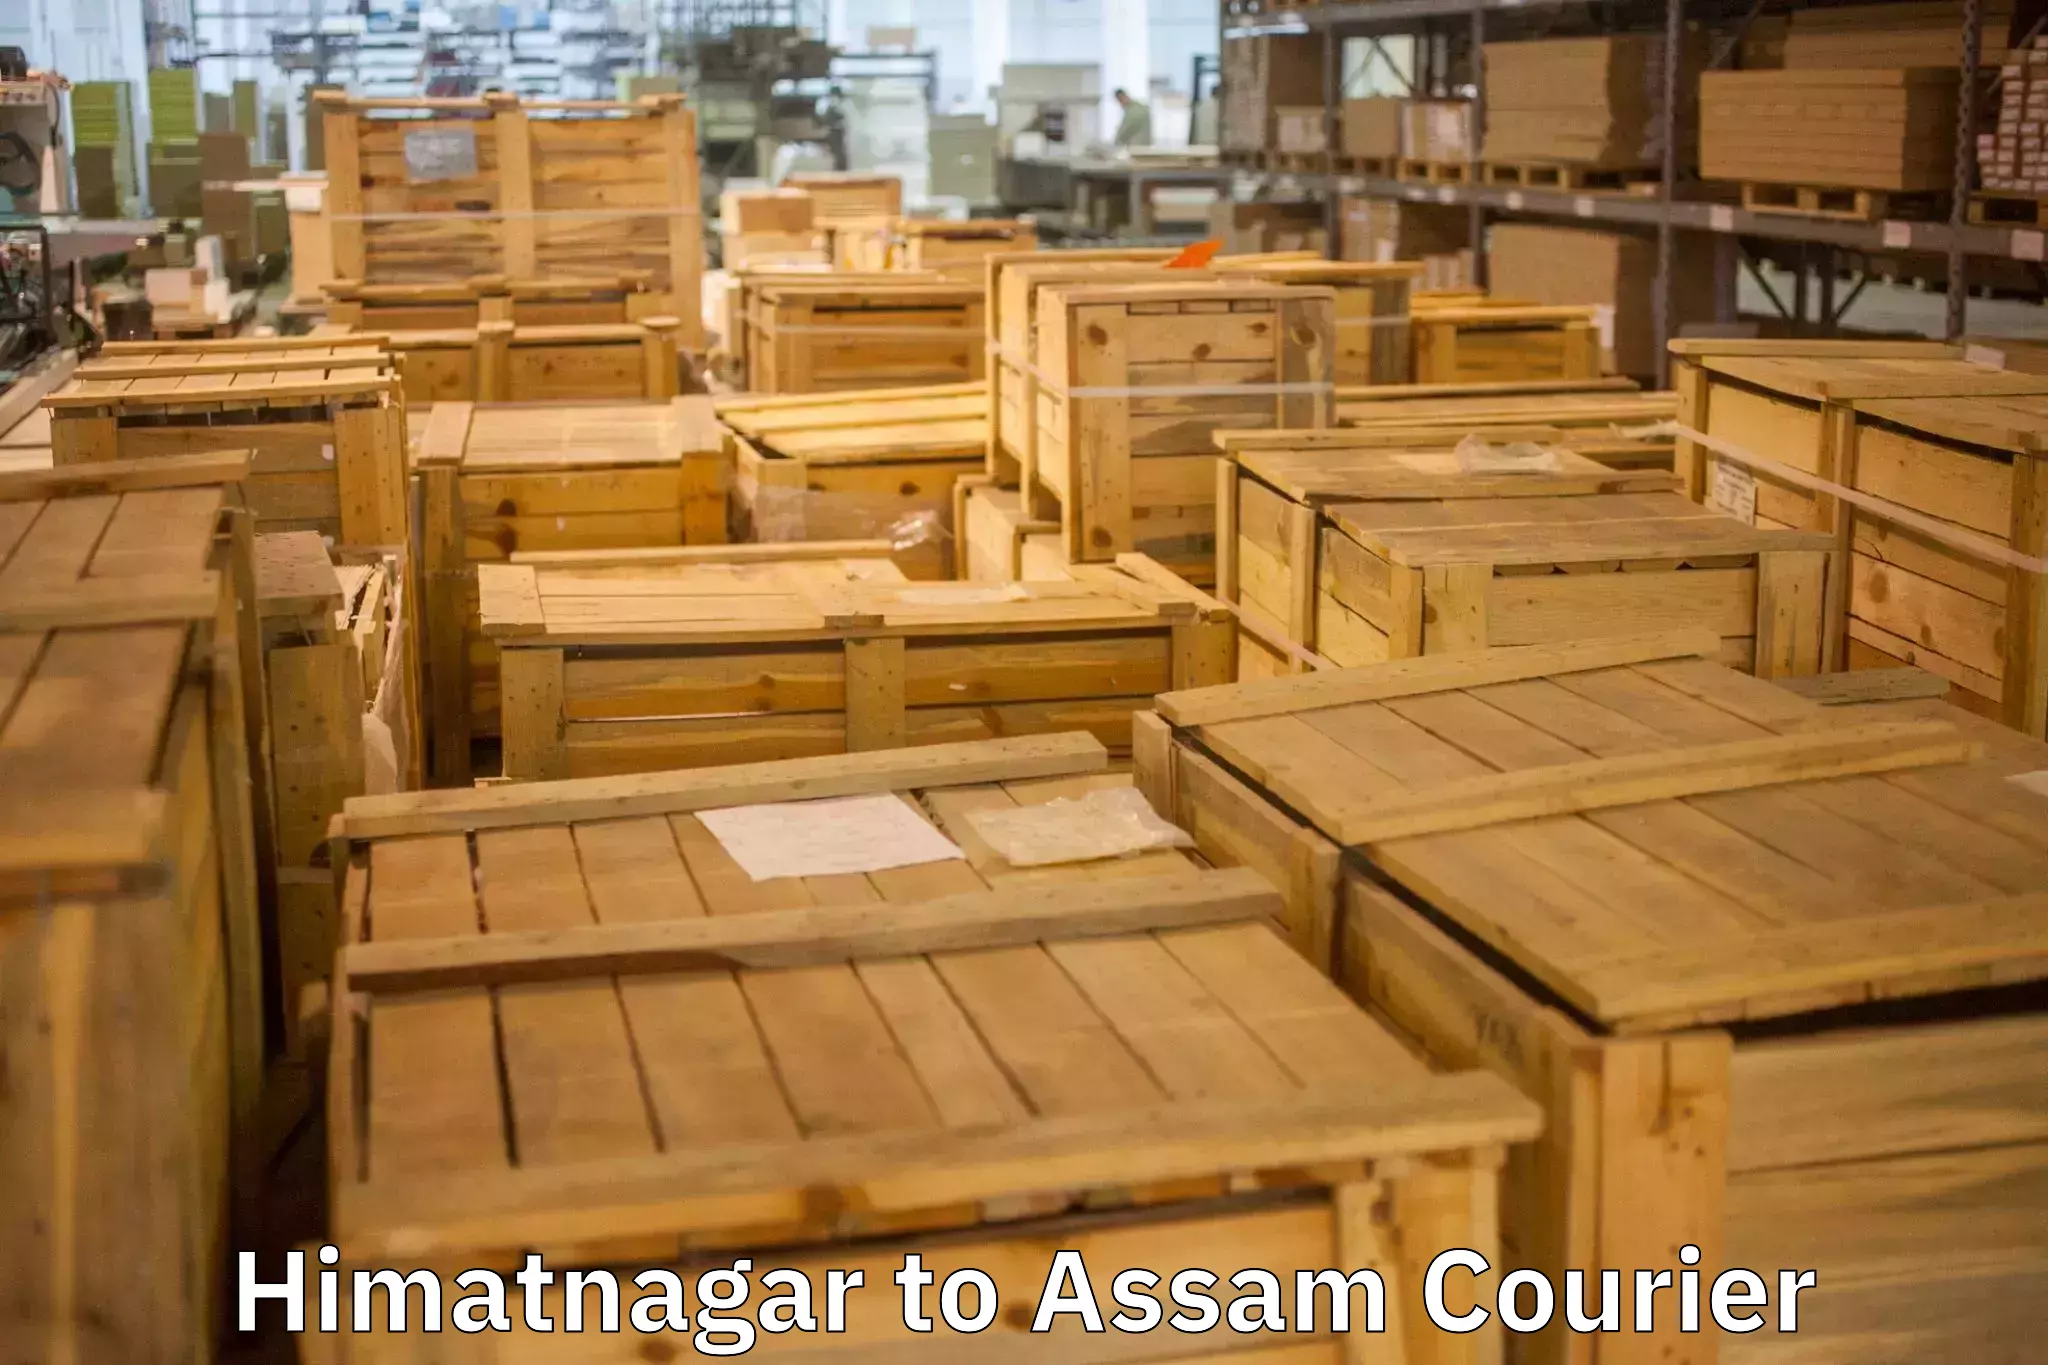 Furniture relocation experts Himatnagar to Hailakandi